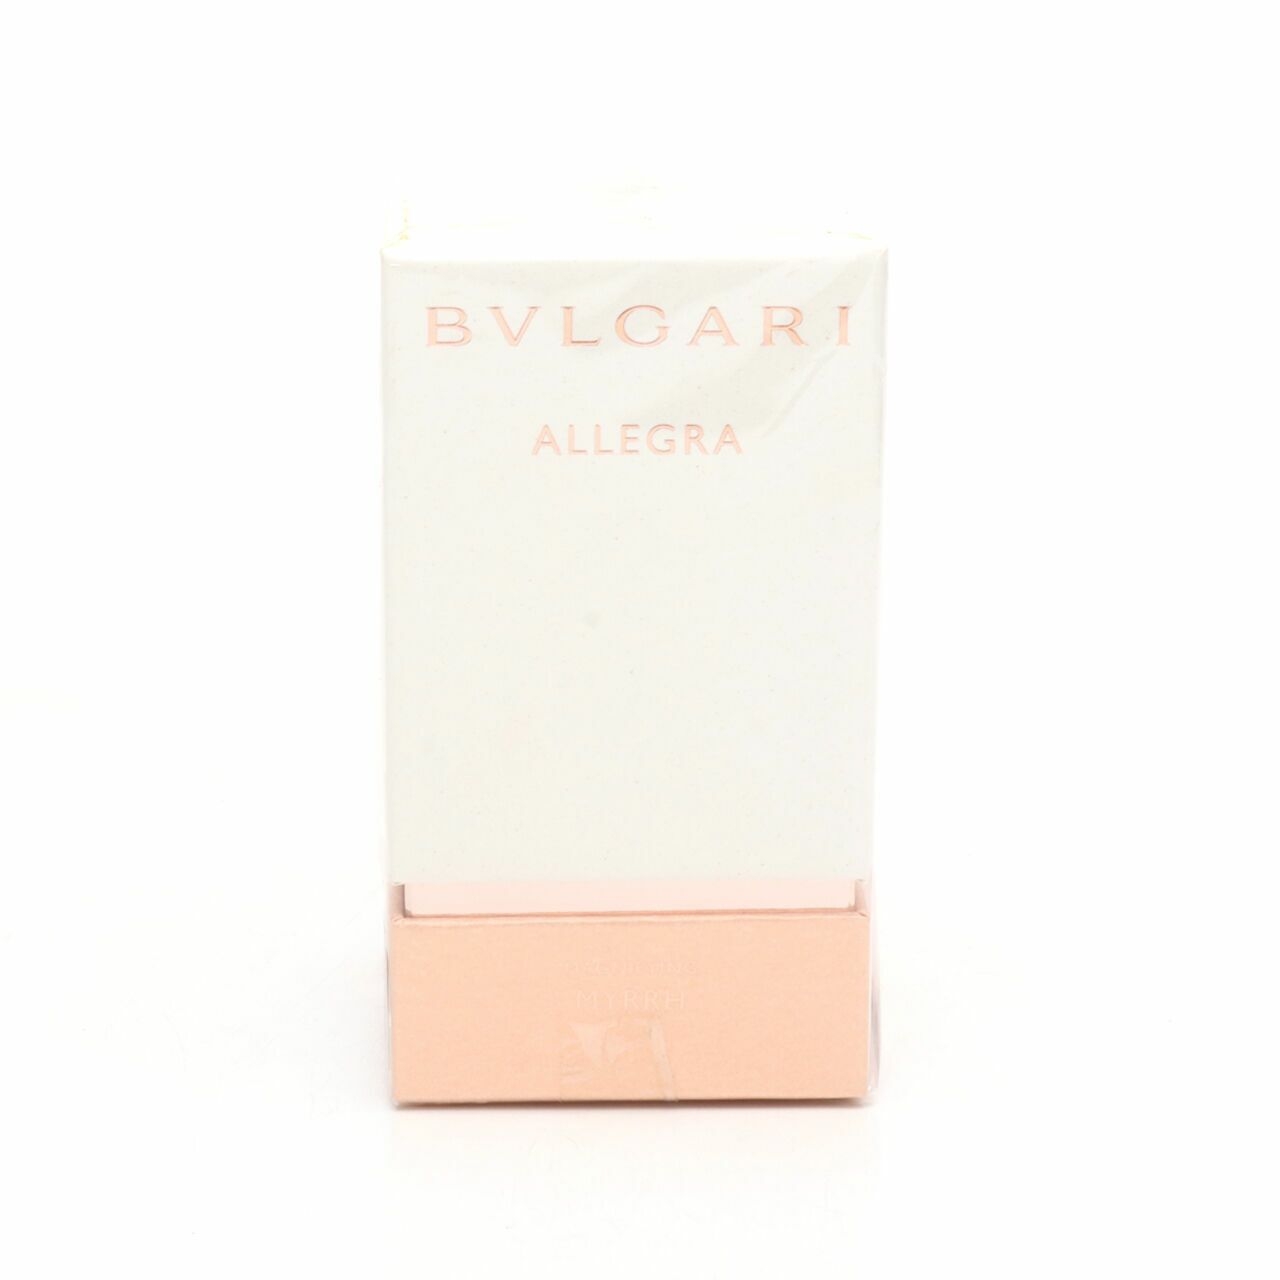 Bvlgari Allegra Magnifying MYRRH Essence Eau de Parfum Fragrance